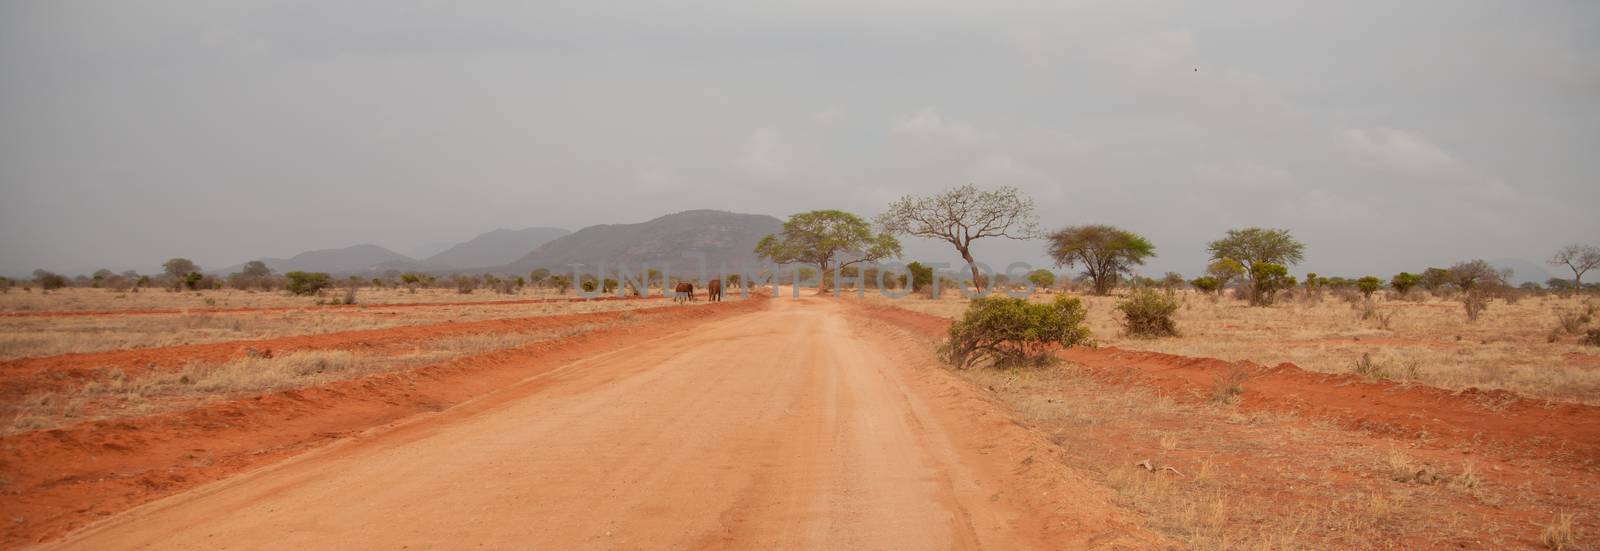 Landscape in Kenya, trees and hills, on safari in Kenya by 25ehaag6